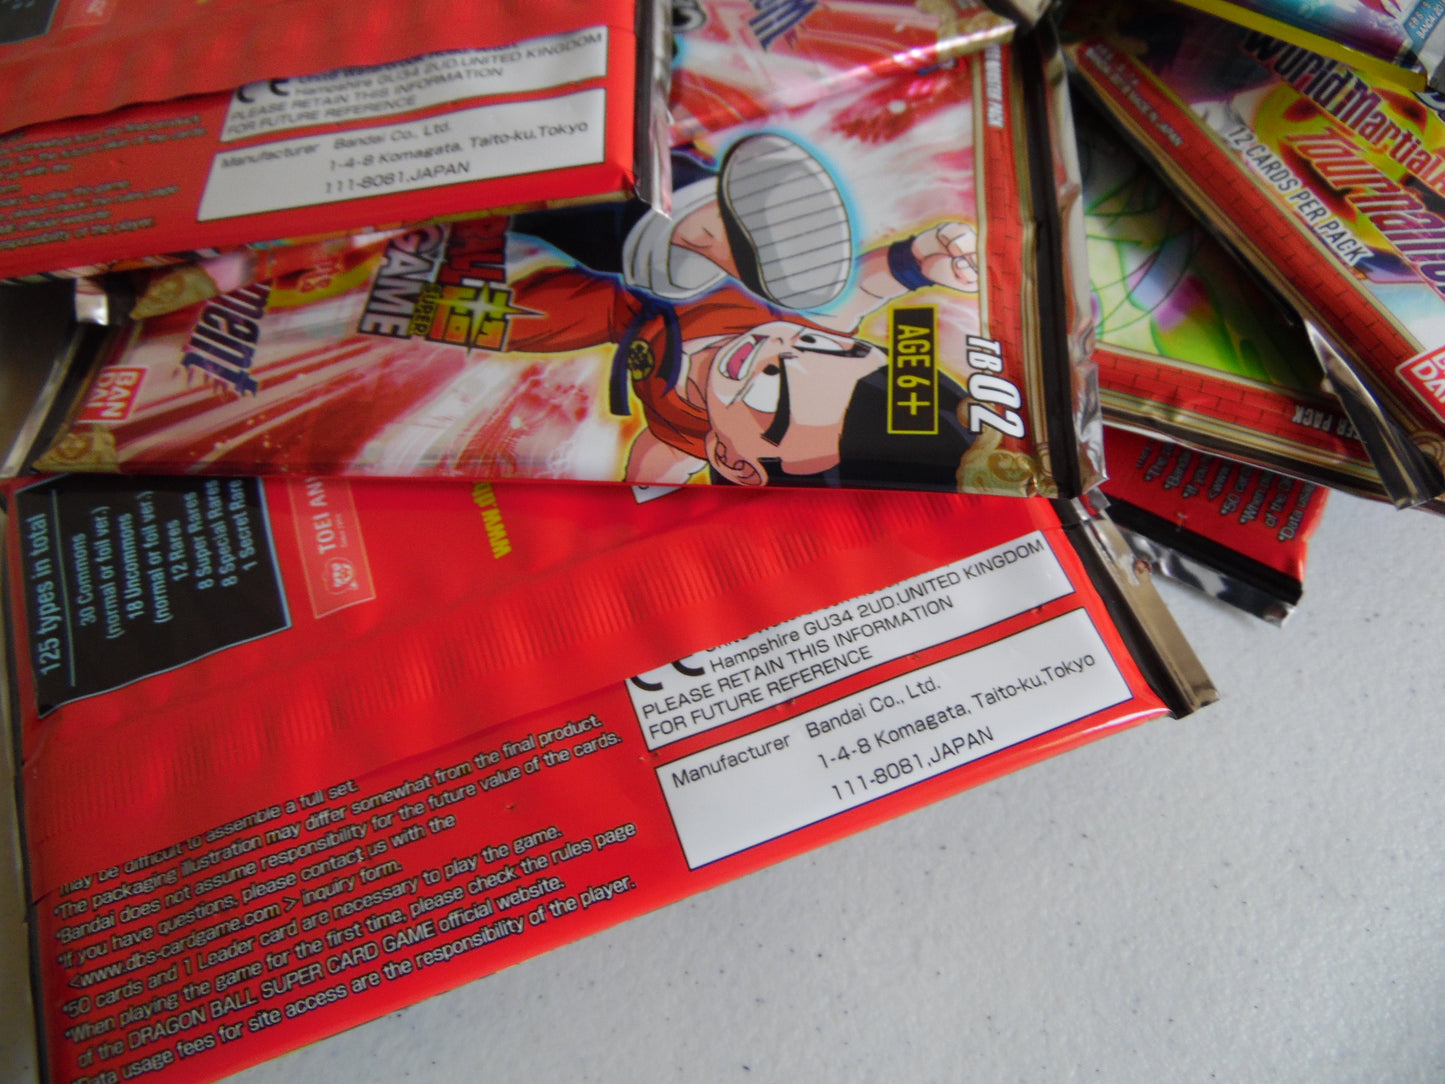 Dragon Ball Super Draft 03 Booster Card Game Sealed Individual Single Packs 12 Cards Per Packs